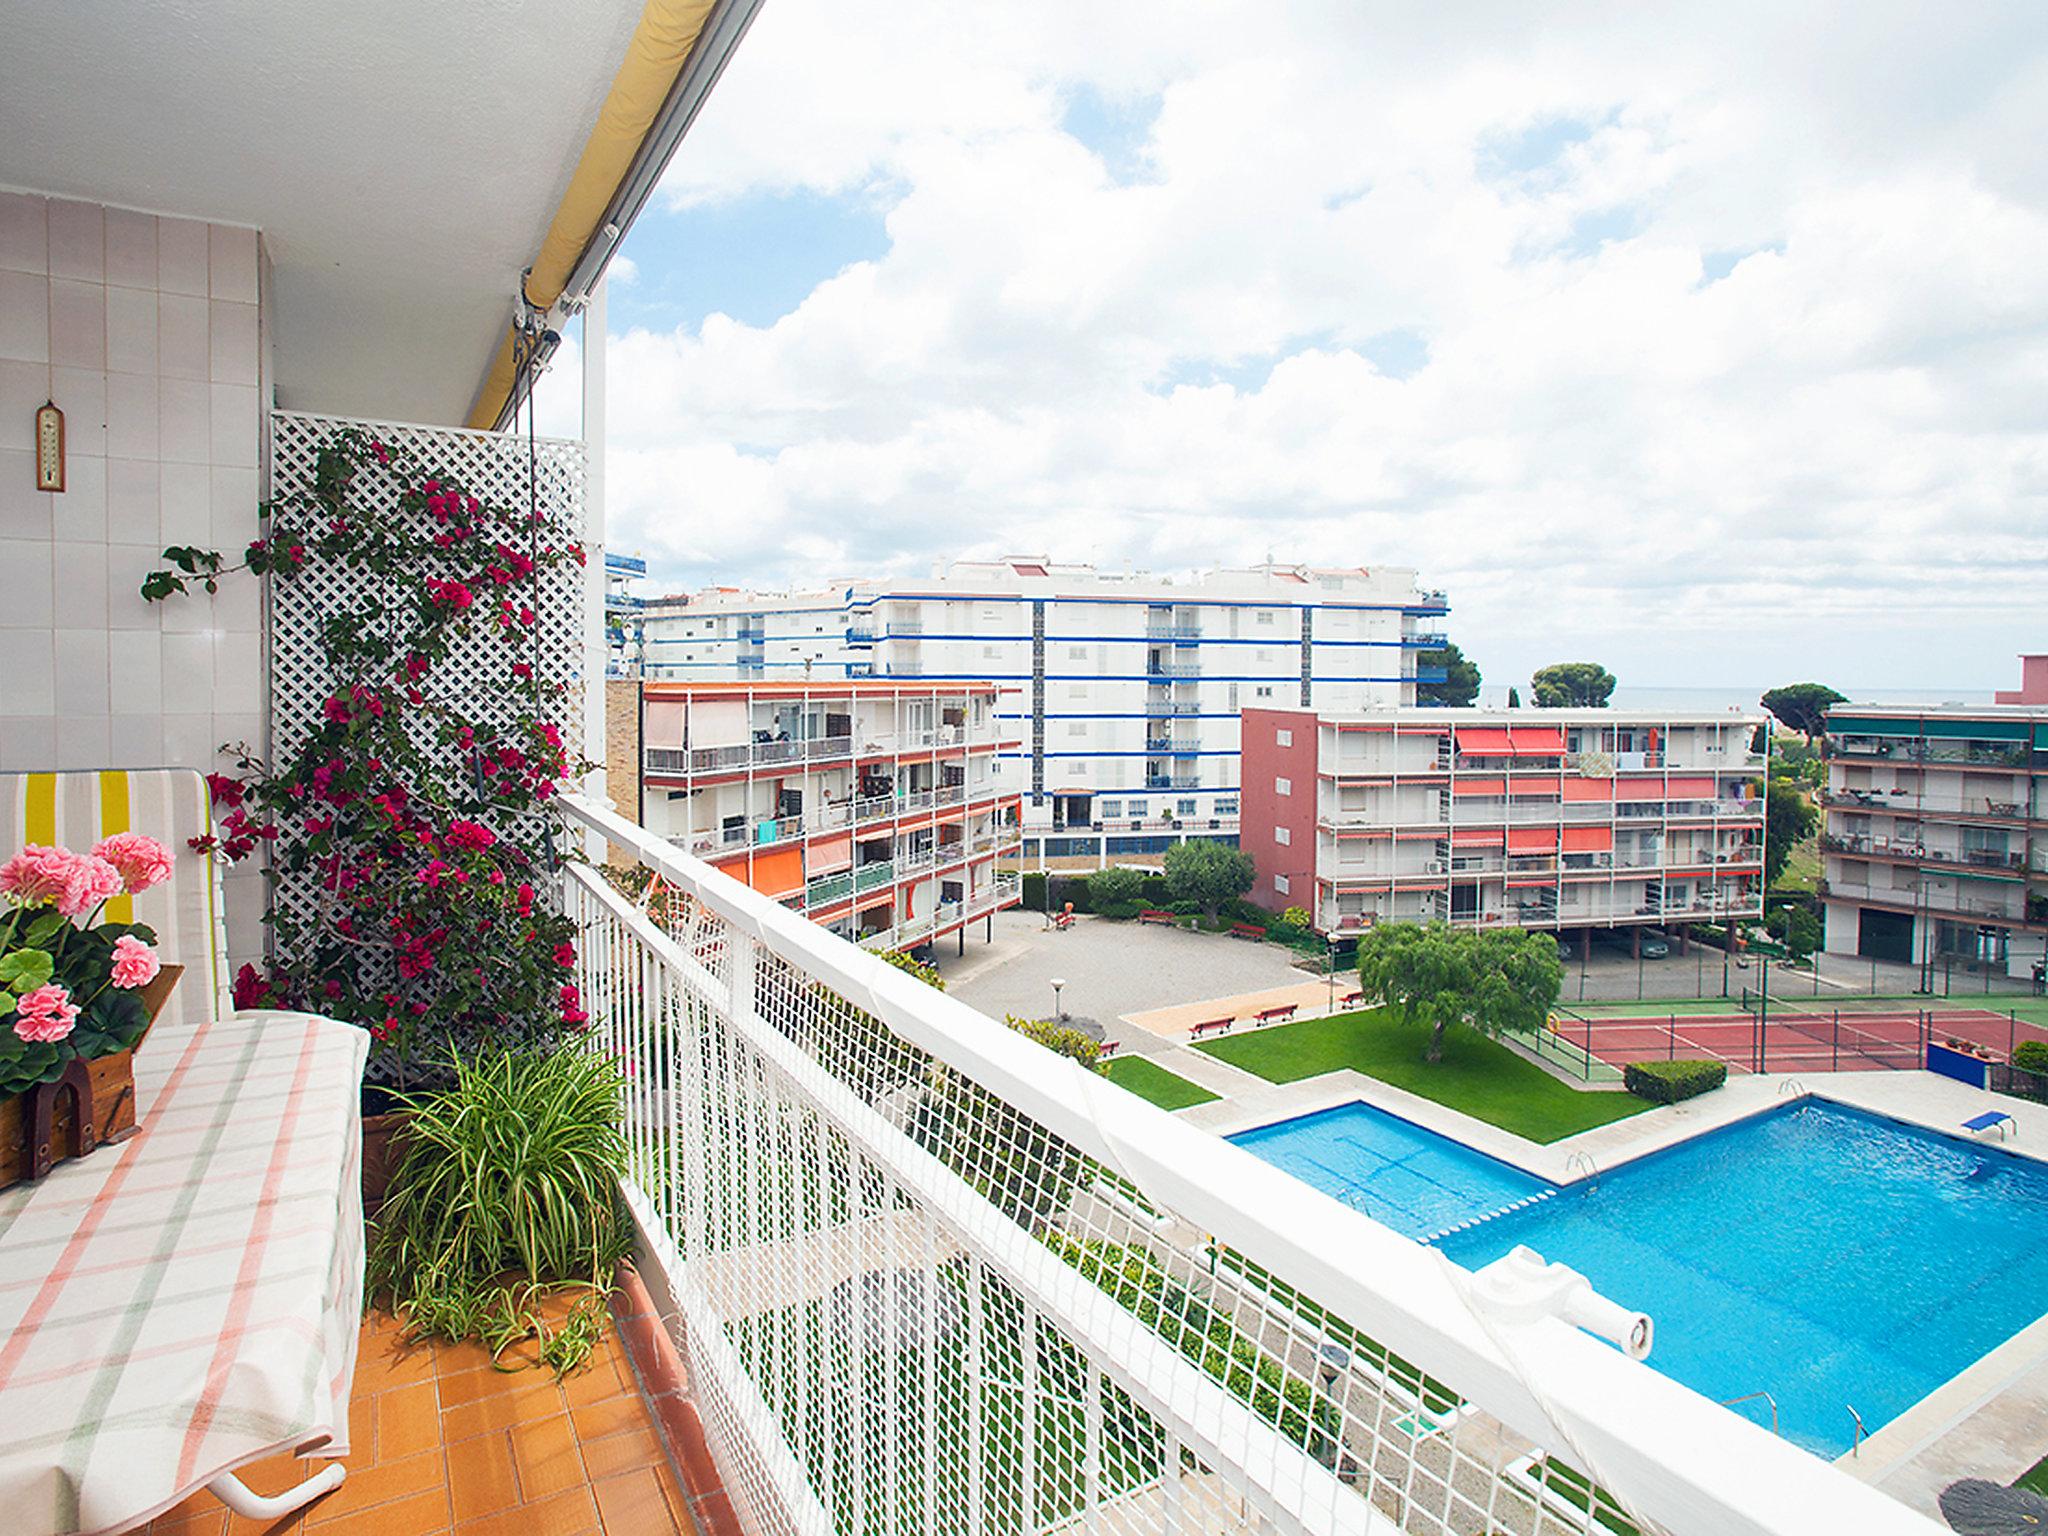 Foto 1 - Appartamento con 2 camere da letto a Sant Andreu de Llavaneres con piscina e giardino